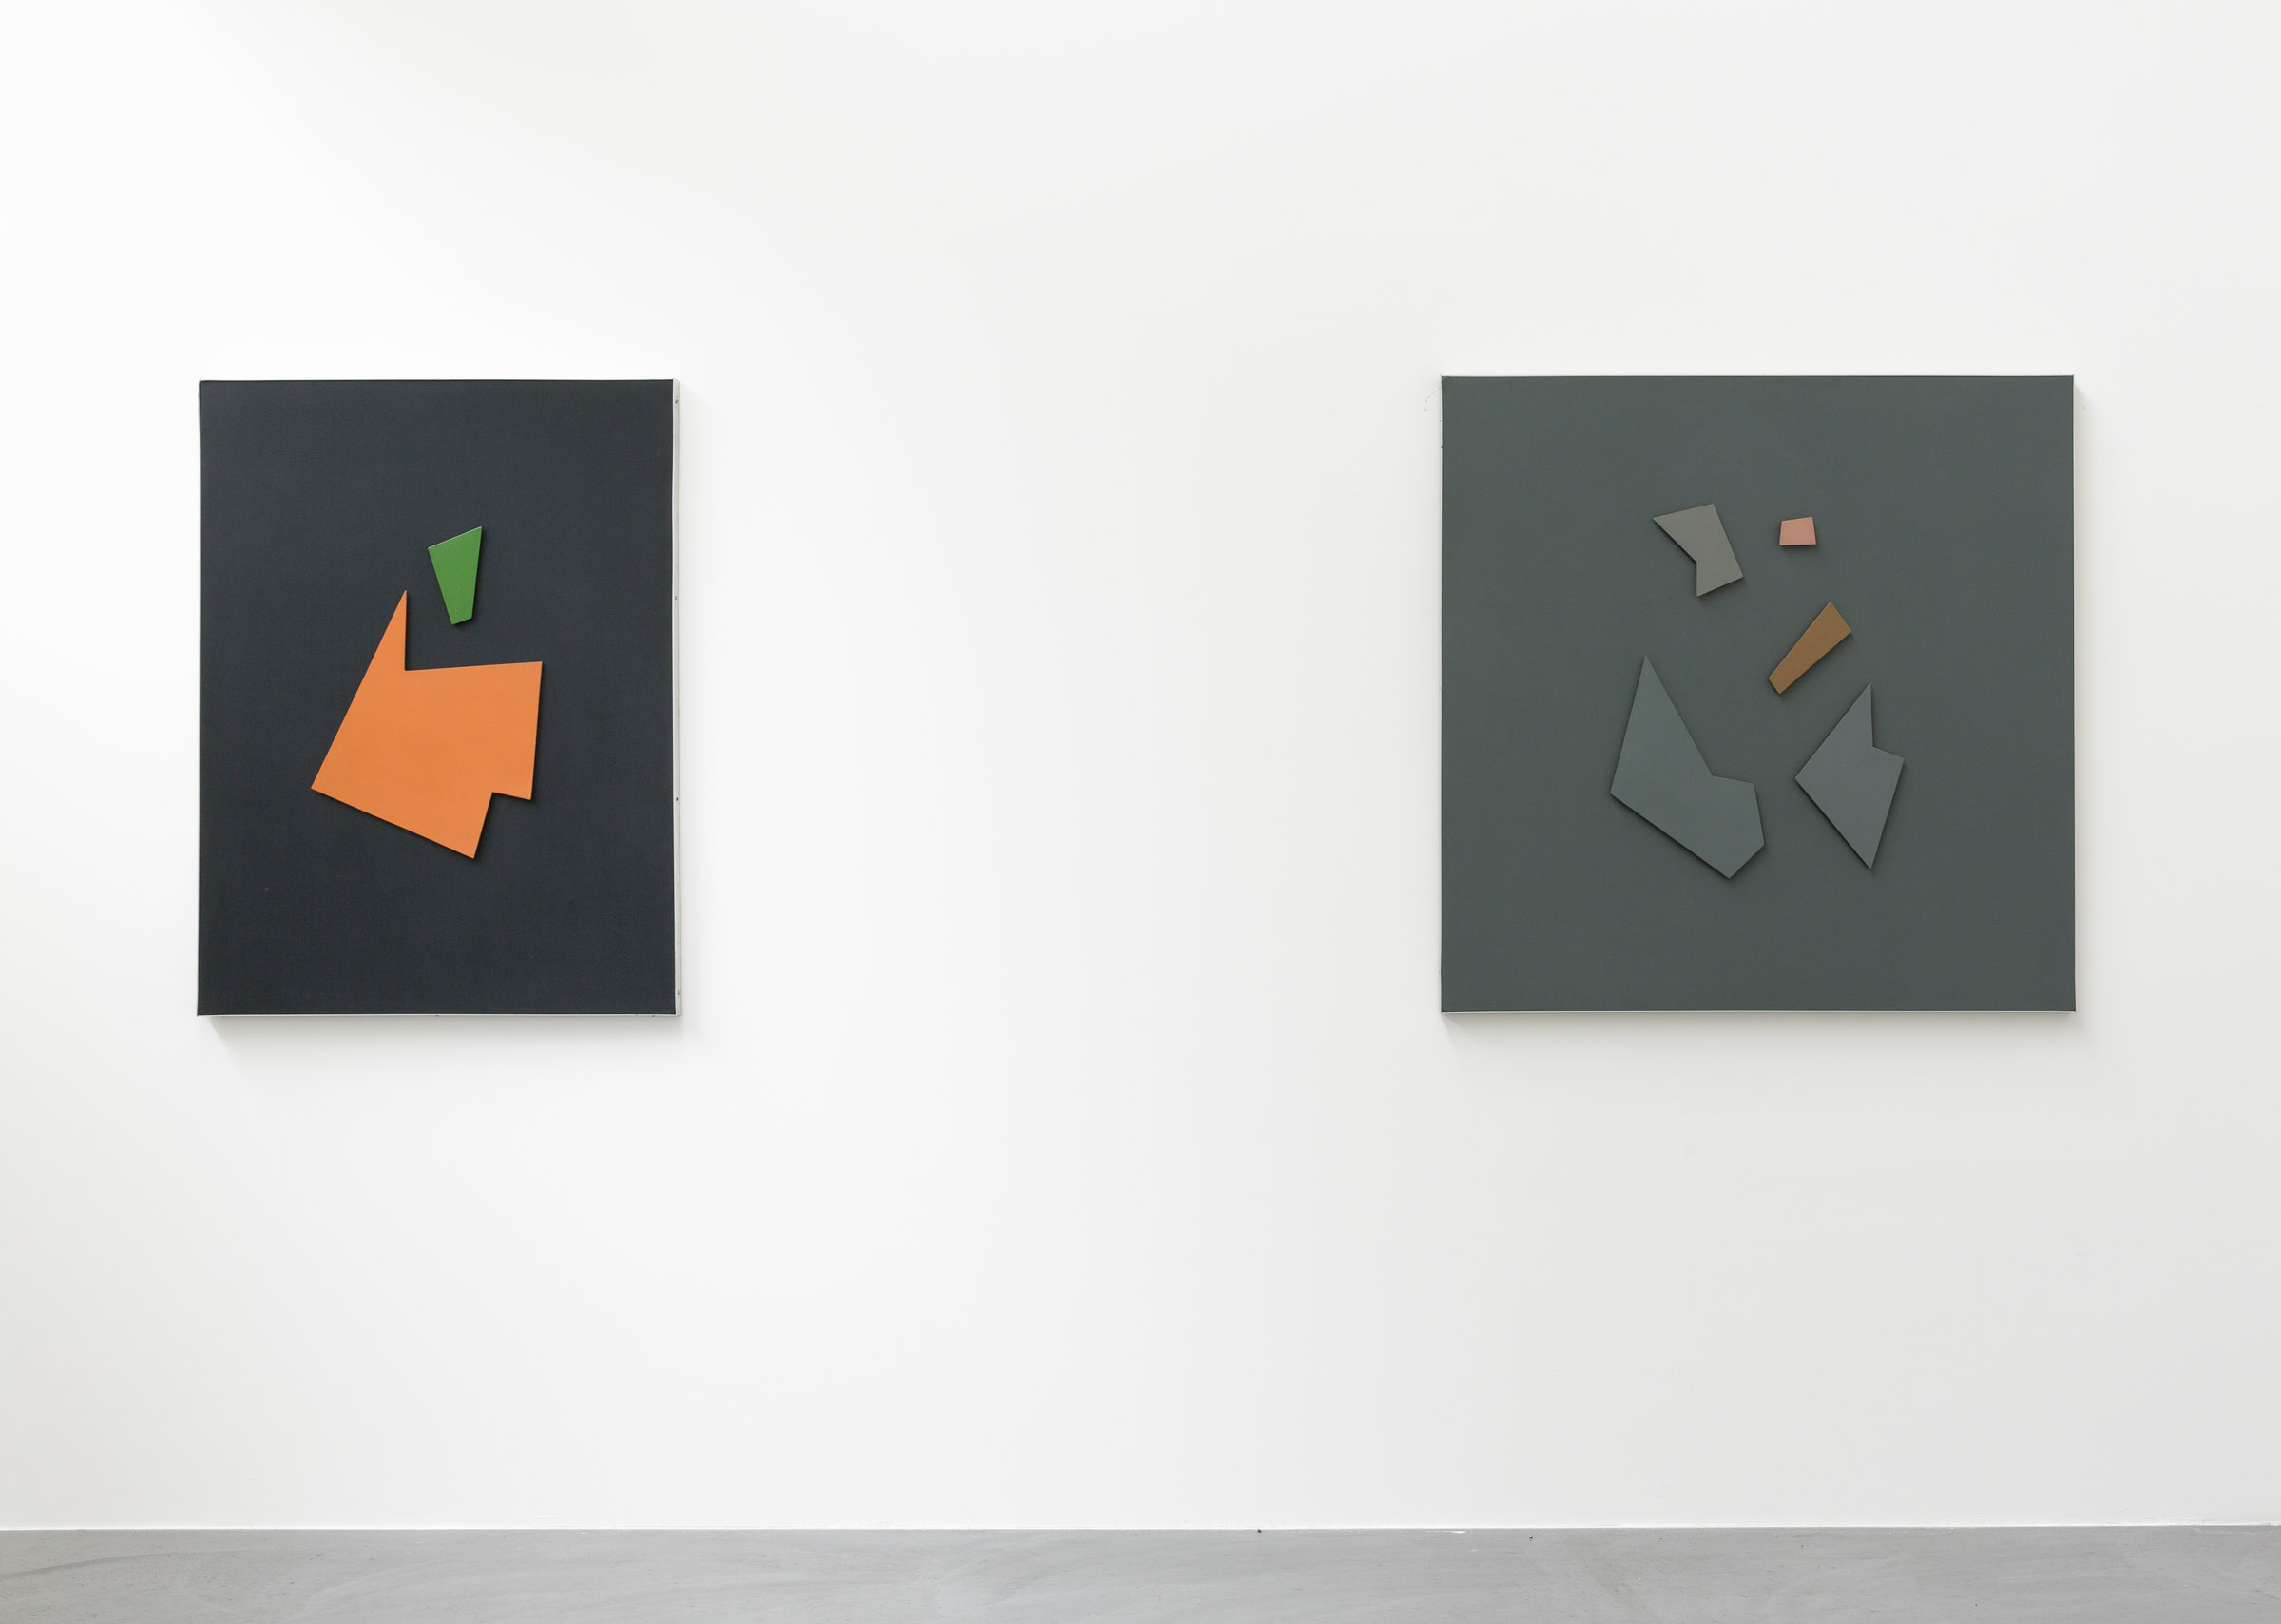 Miklos von Bartha recalls his first encounter with Arte Concreto and Arte Madí